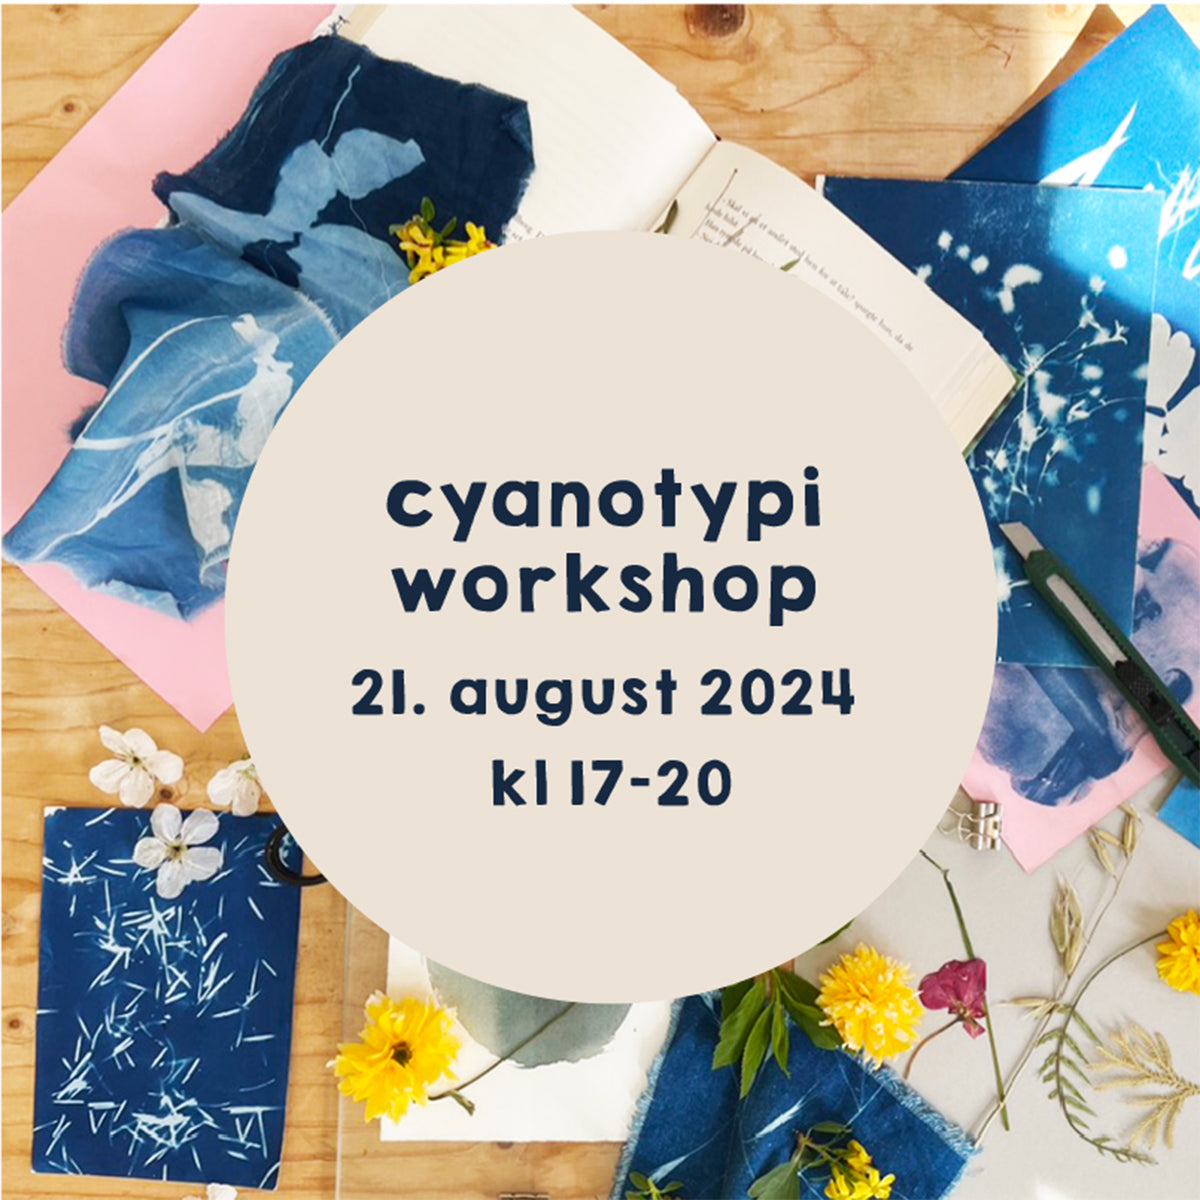 Workshop: Cyanotypi / 21. august